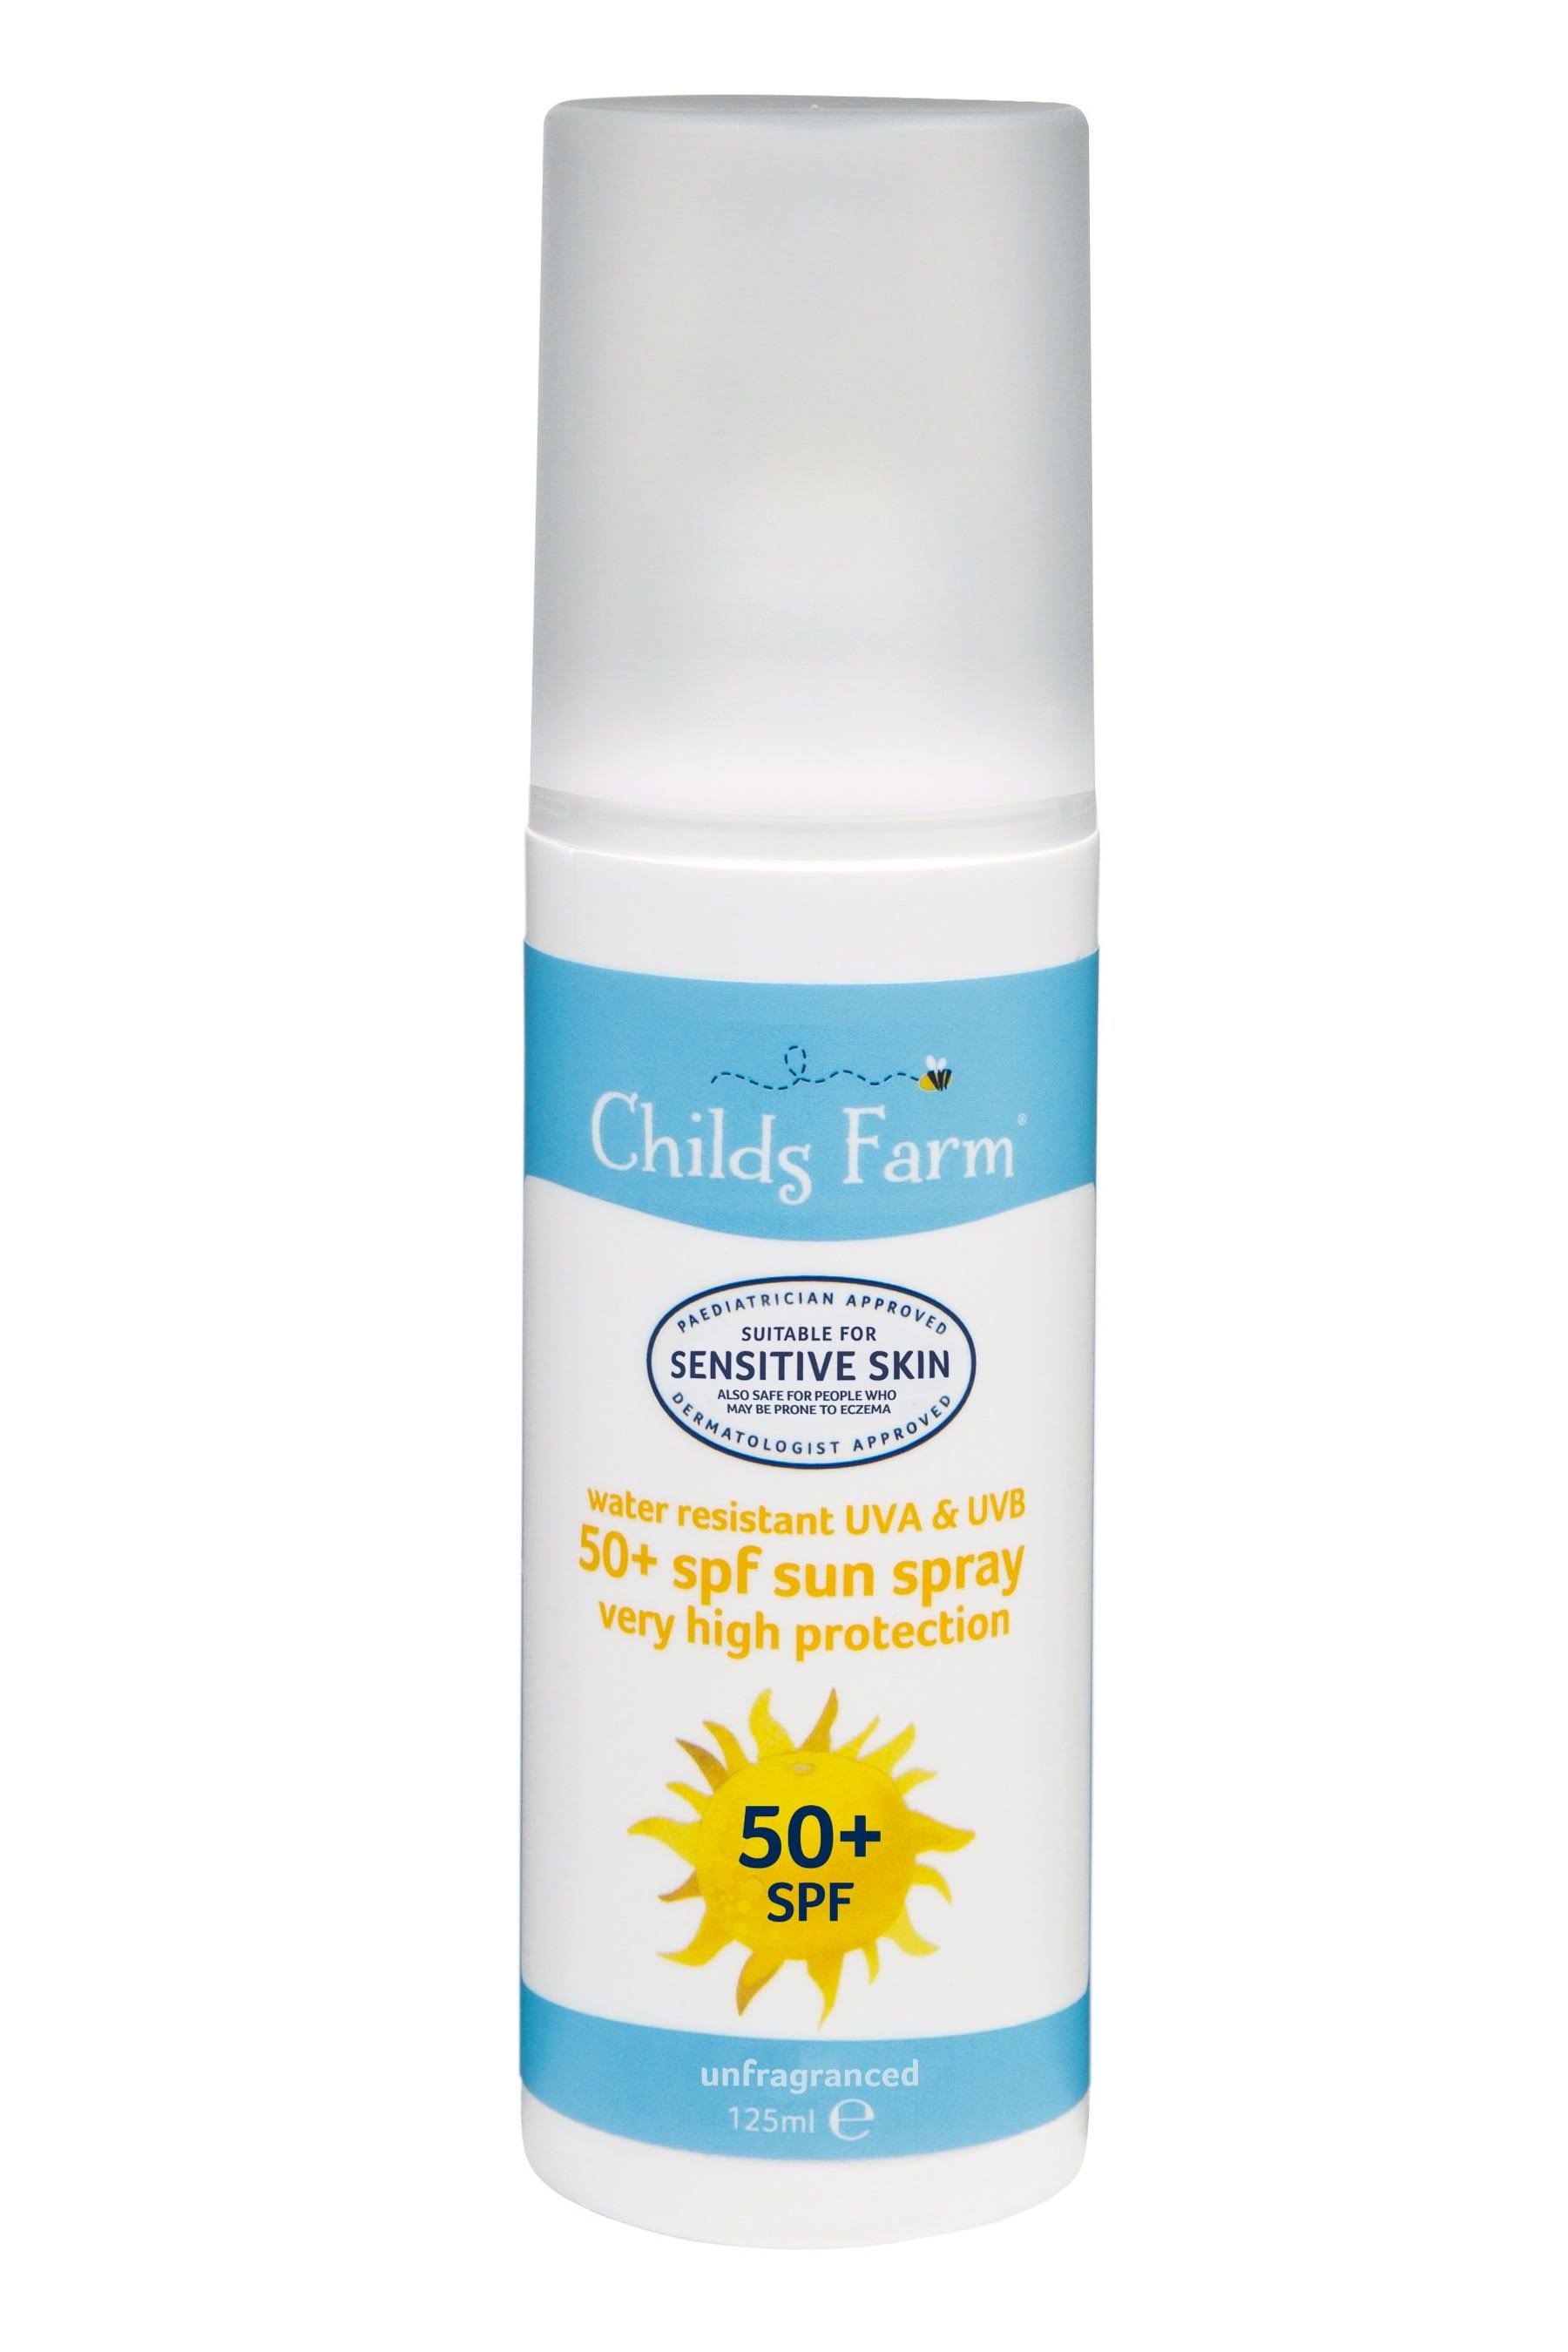 Childs Farm Sun Lotion Spray - Unfragranced, 50+ SPF, 125ml